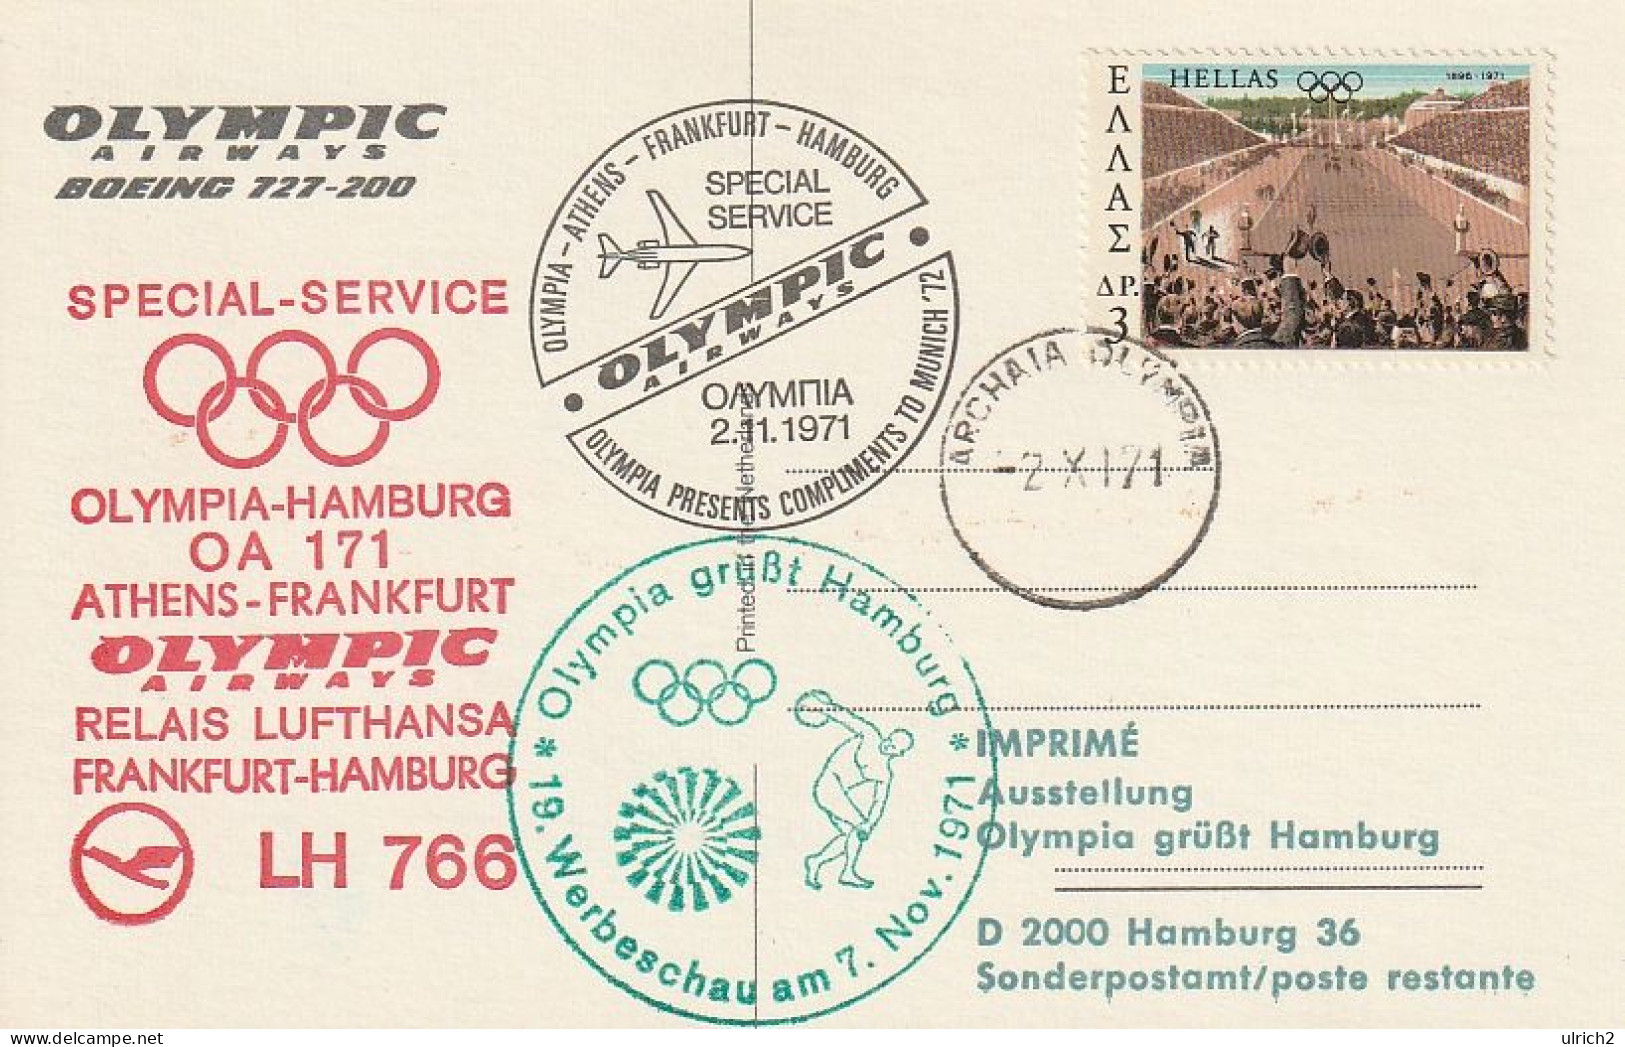 Greece - Olympia Grüßt Hamburg - Olympic Special Service Athens-Frankfurt LH 766 - 1971  (67177) - Briefe U. Dokumente